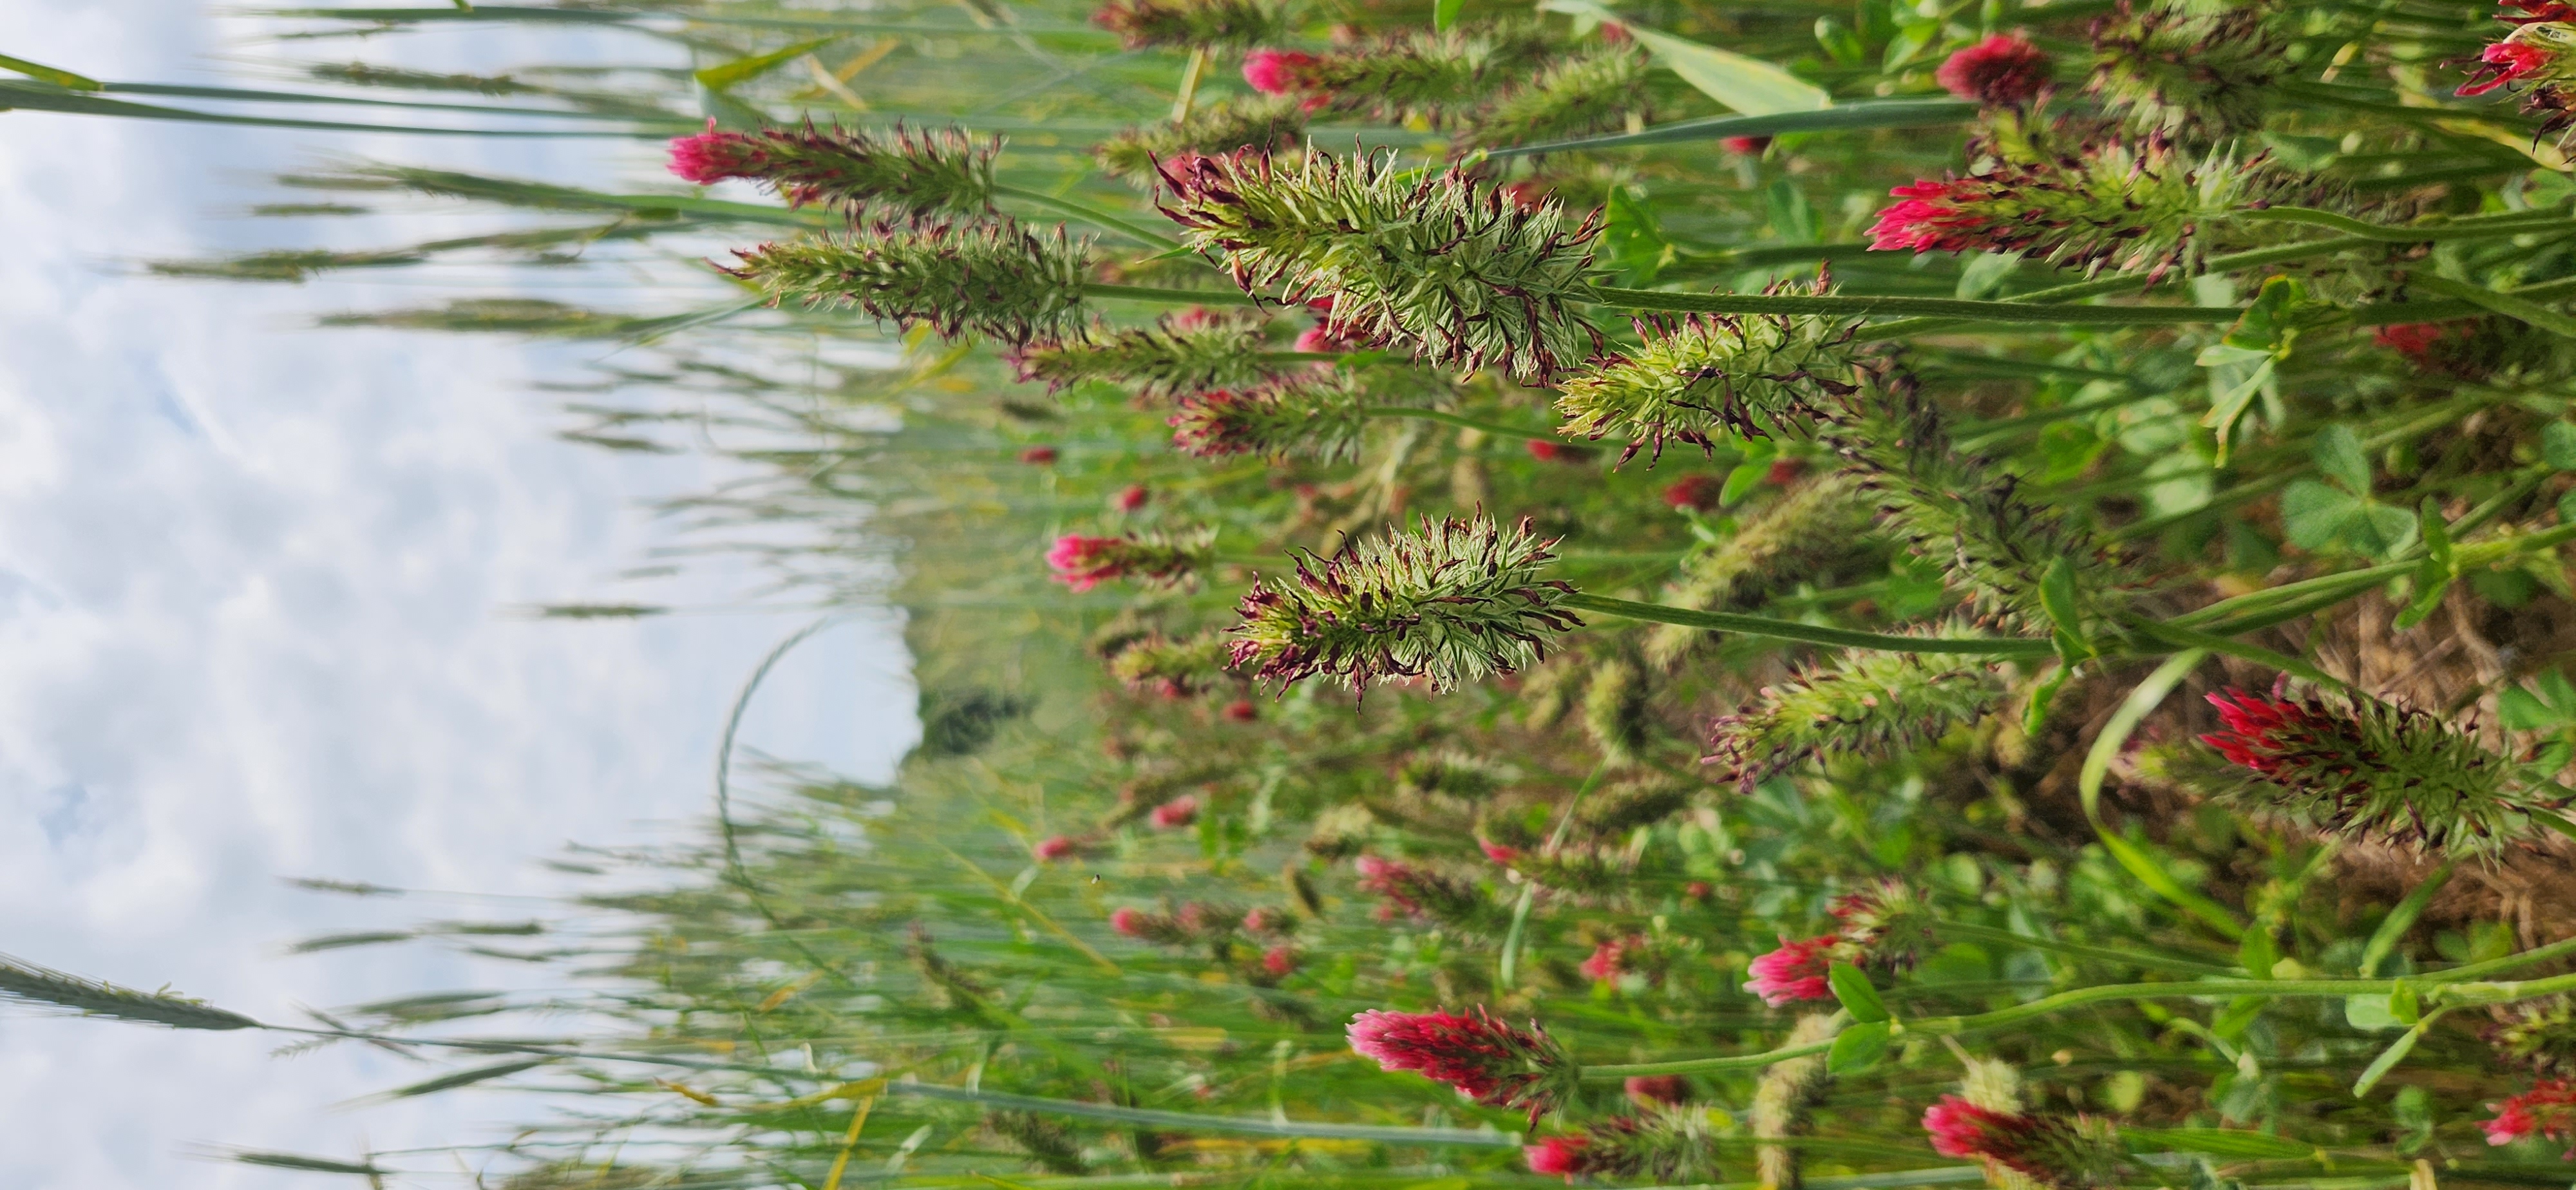 Spiky red wildflowers in a field.